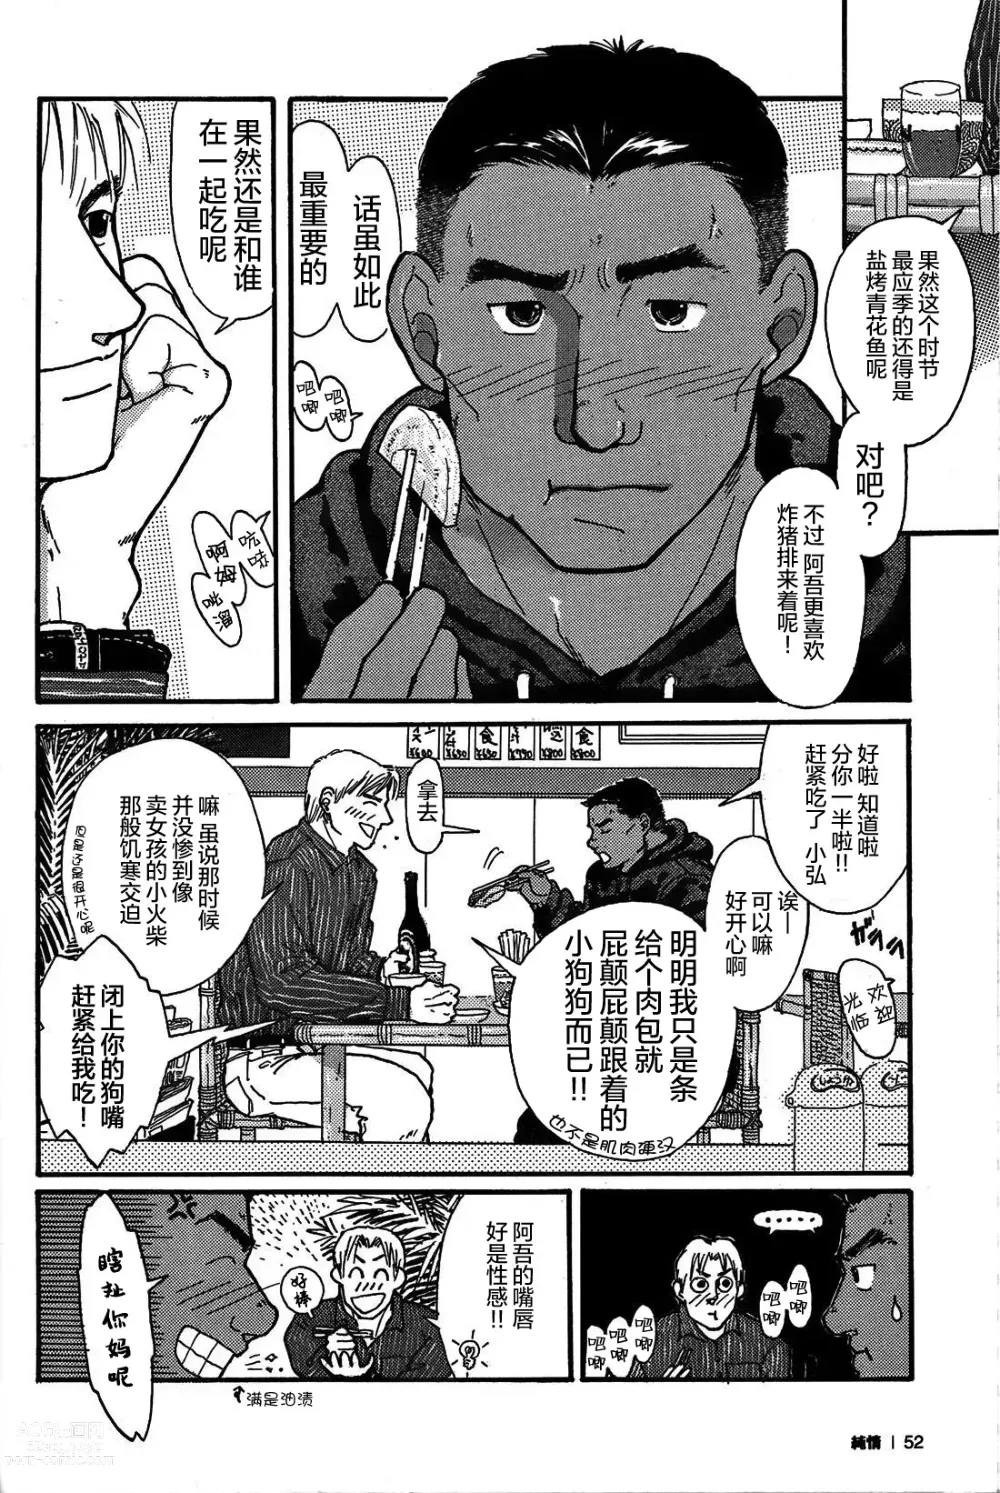 Page 2 of manga 纯情!! 第二章 「爱情的模样」